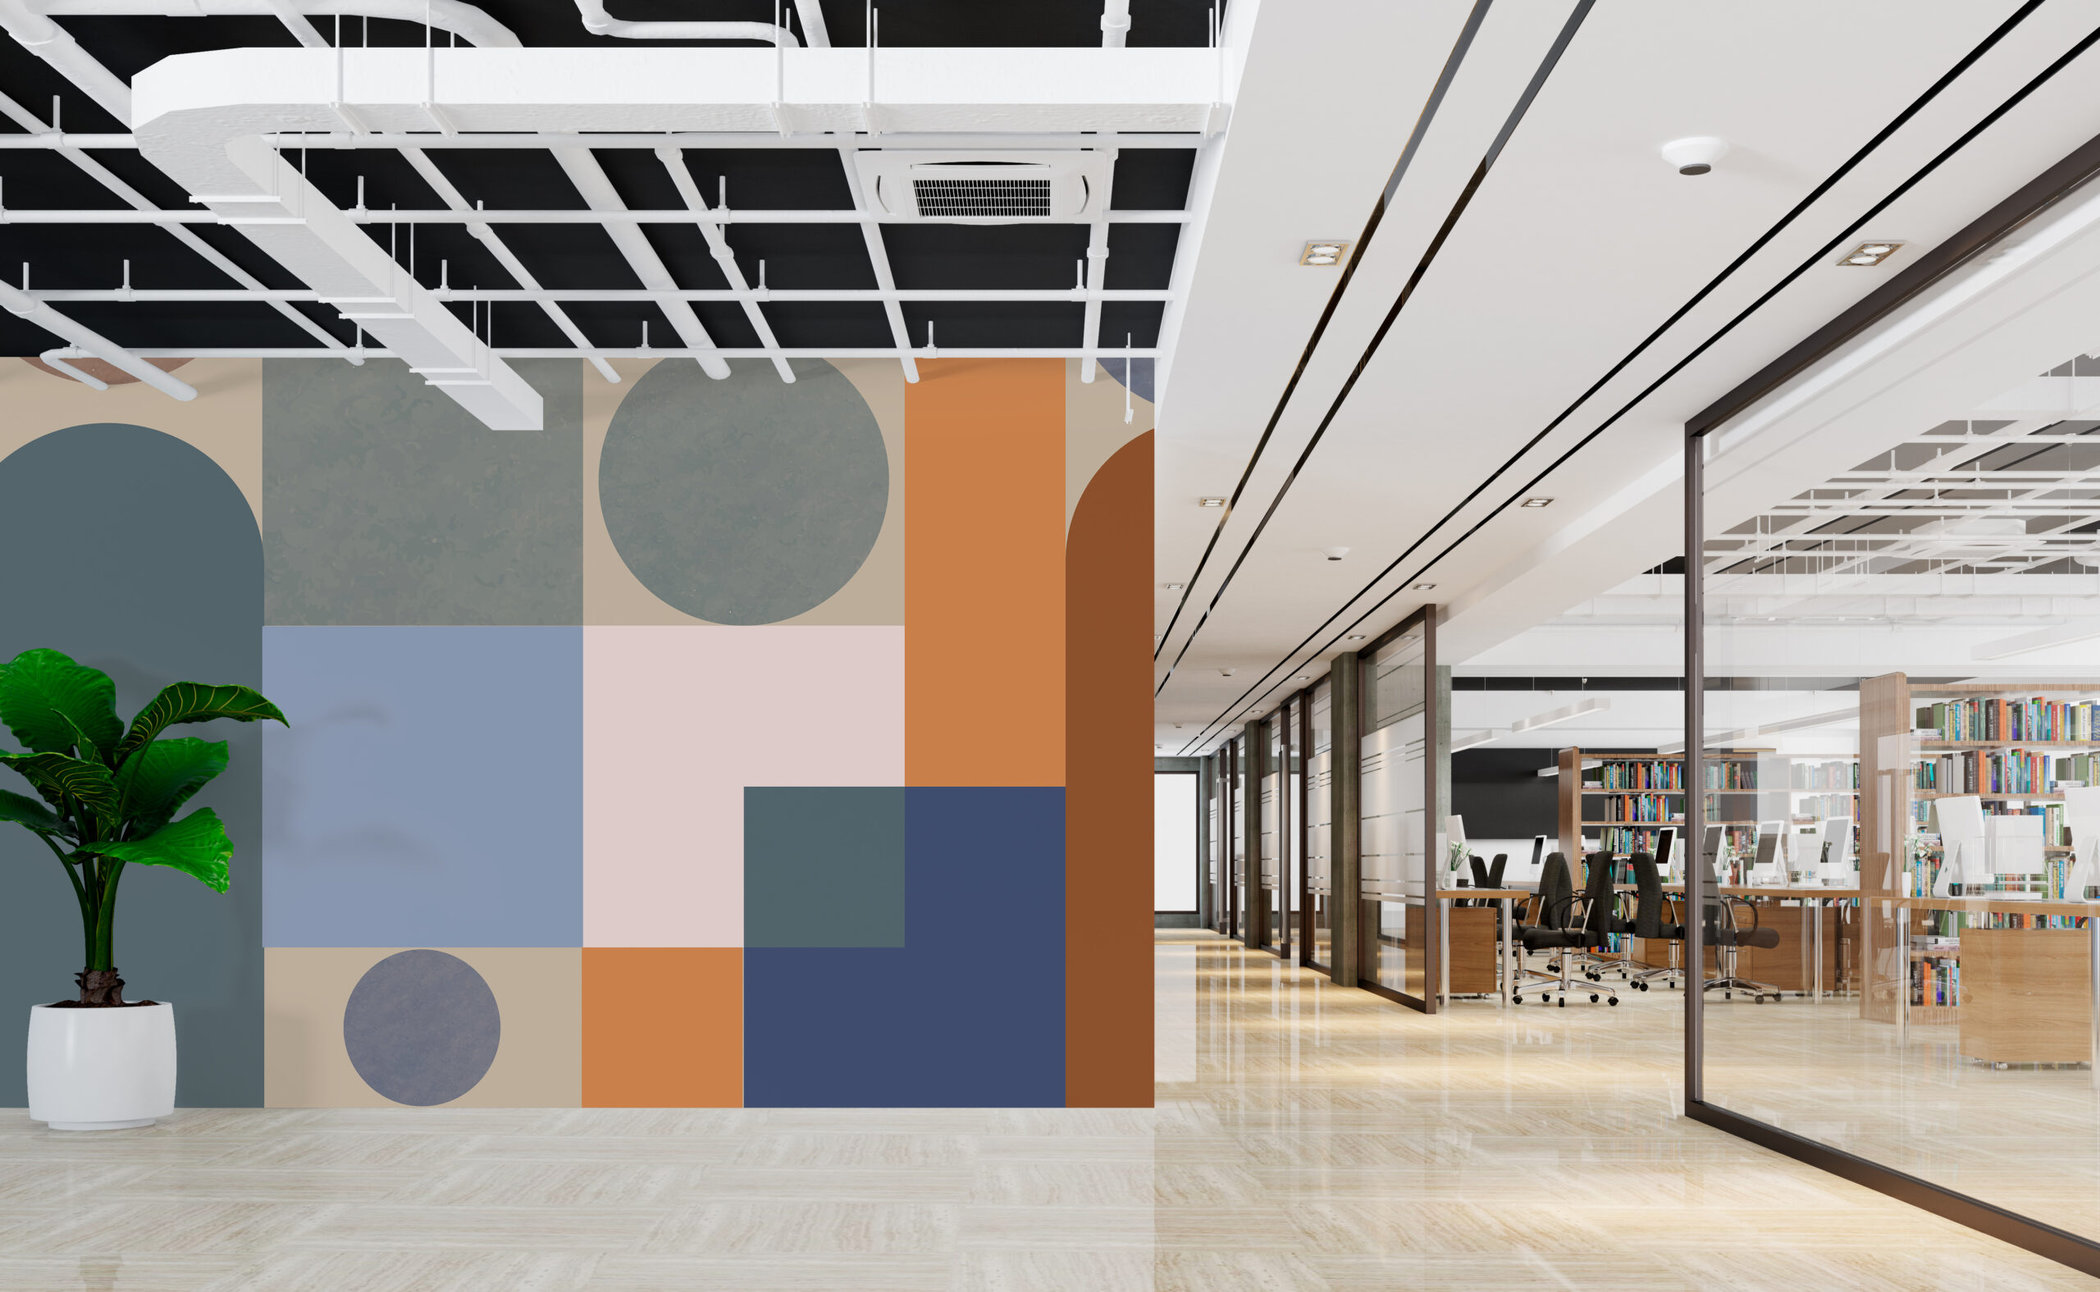 Papel tapiz estilo Bauhaus para decorar oficinas